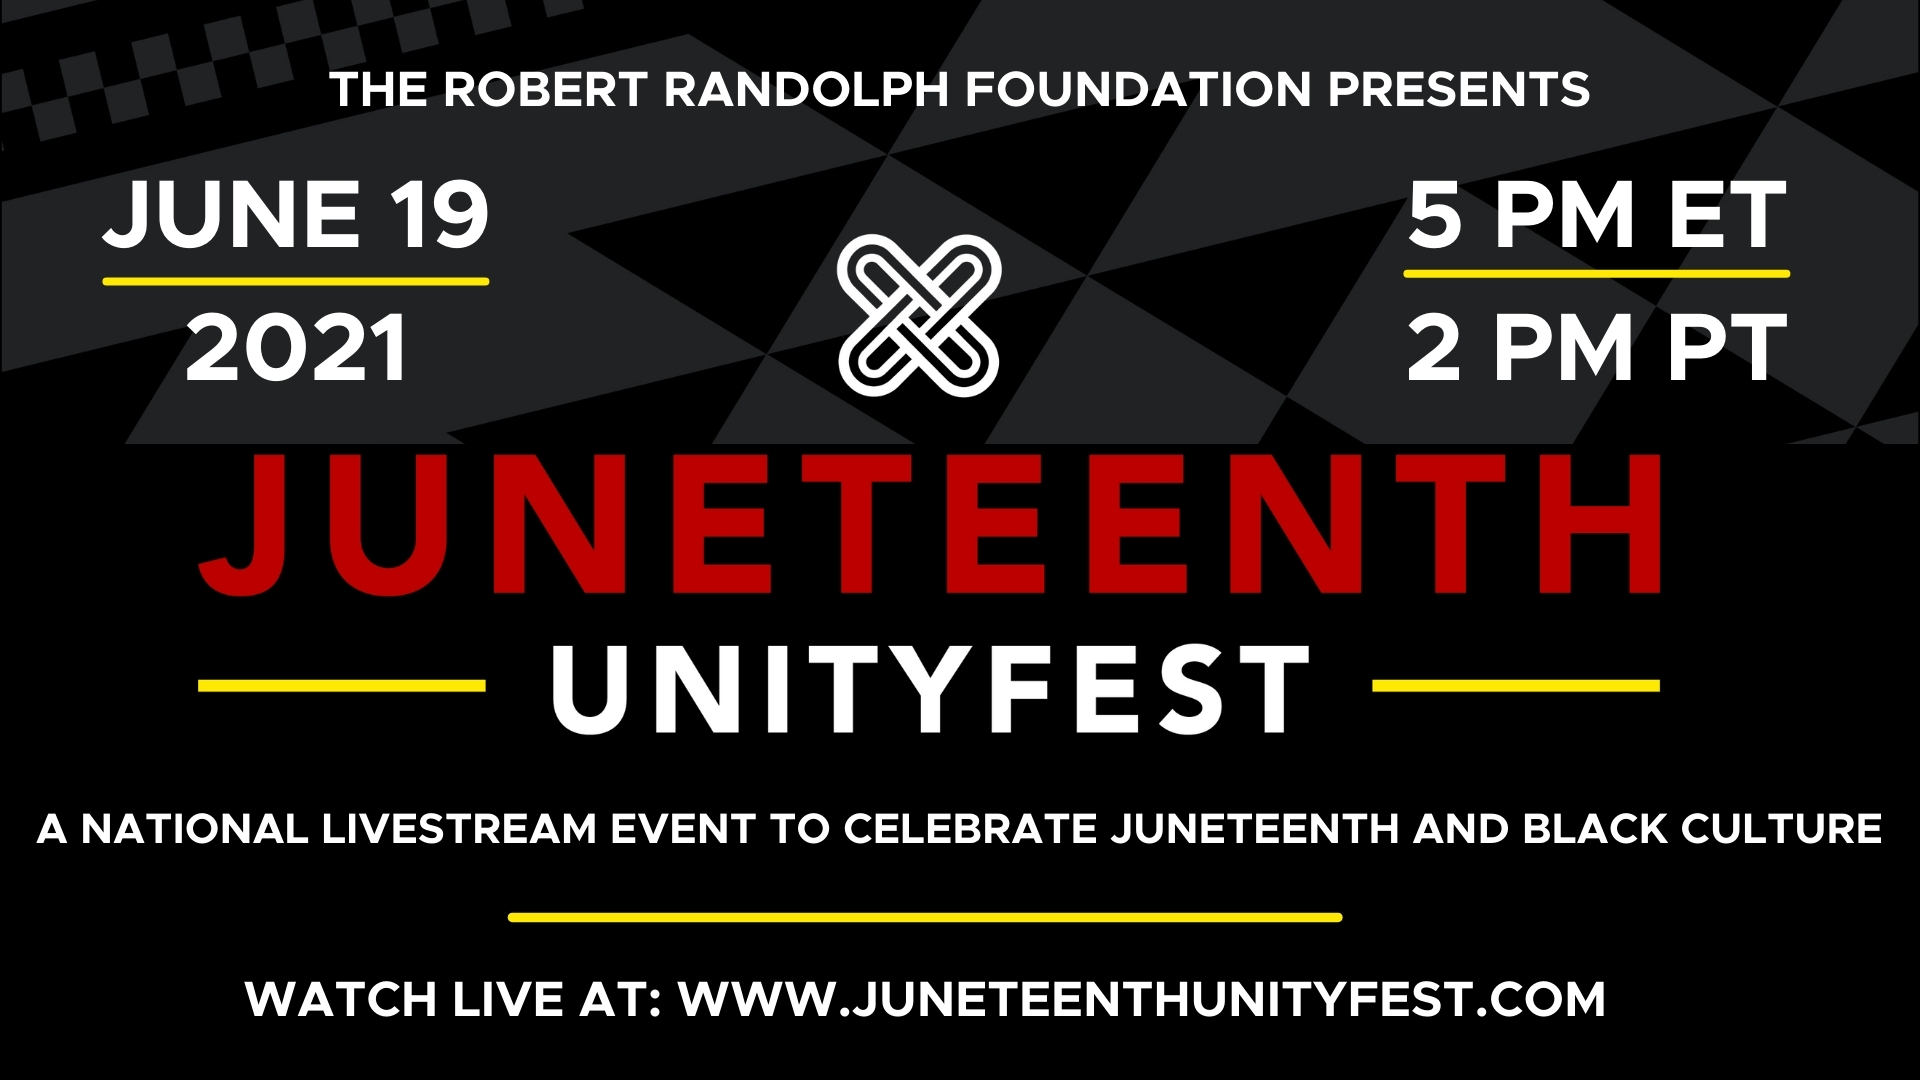 The Robert Randolph Foundation announces JUNETEENTH UNITYFEST 2022